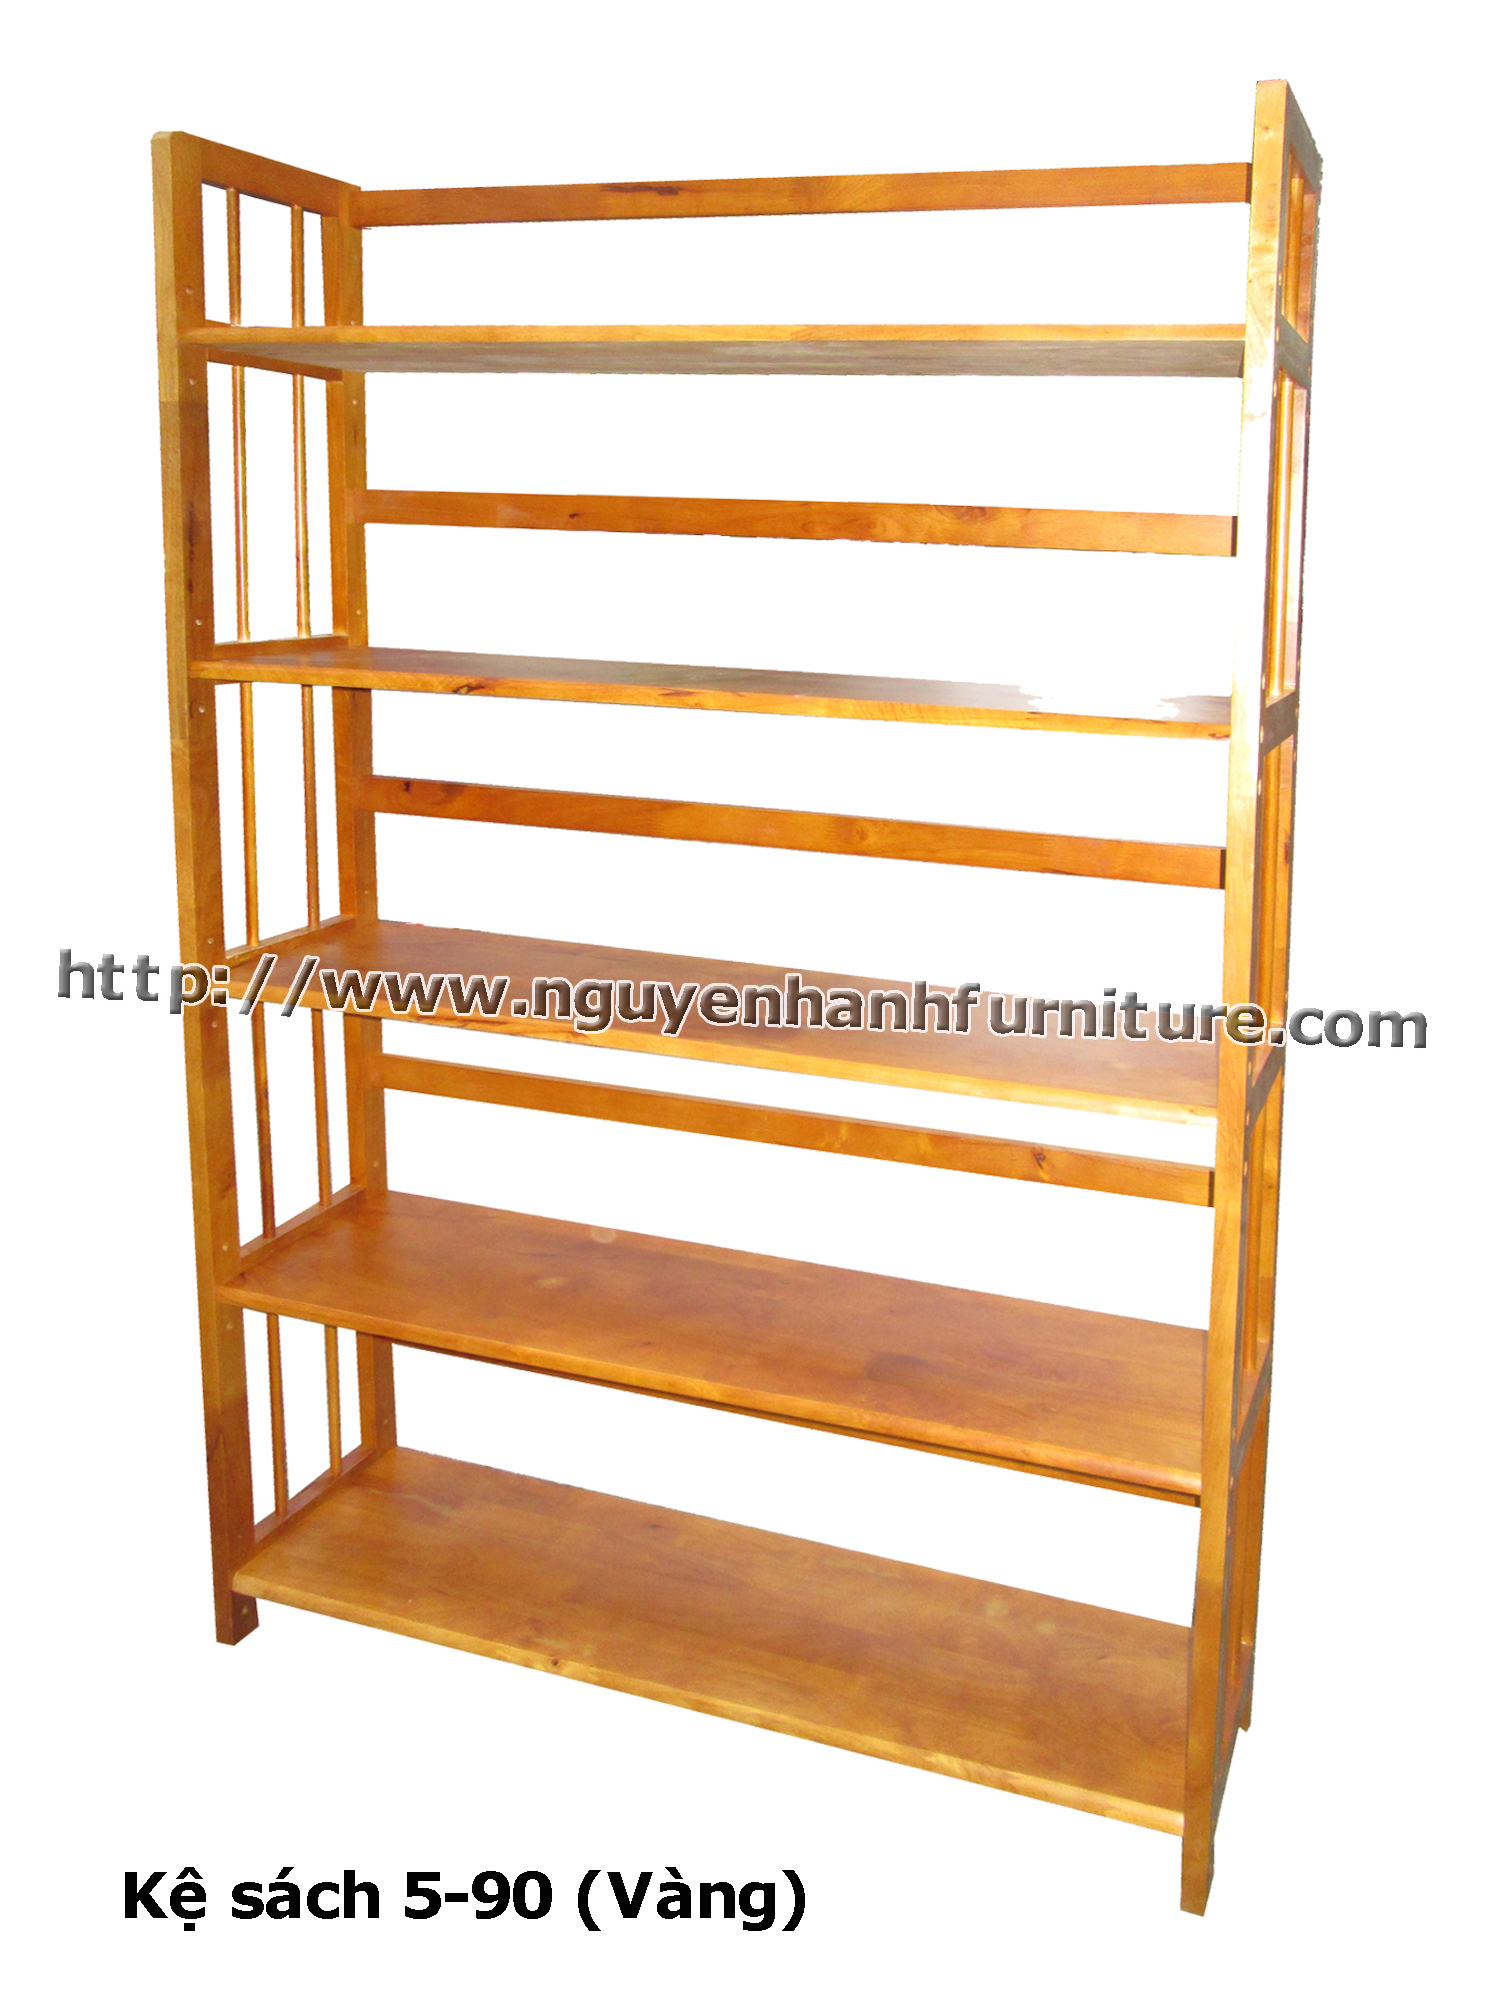 Name product: 5 storey Adjustable Bookshelf 90 (Yellow) - Dimensions: 93 x 28 x 157 (H) - Description: Wood natural rubber